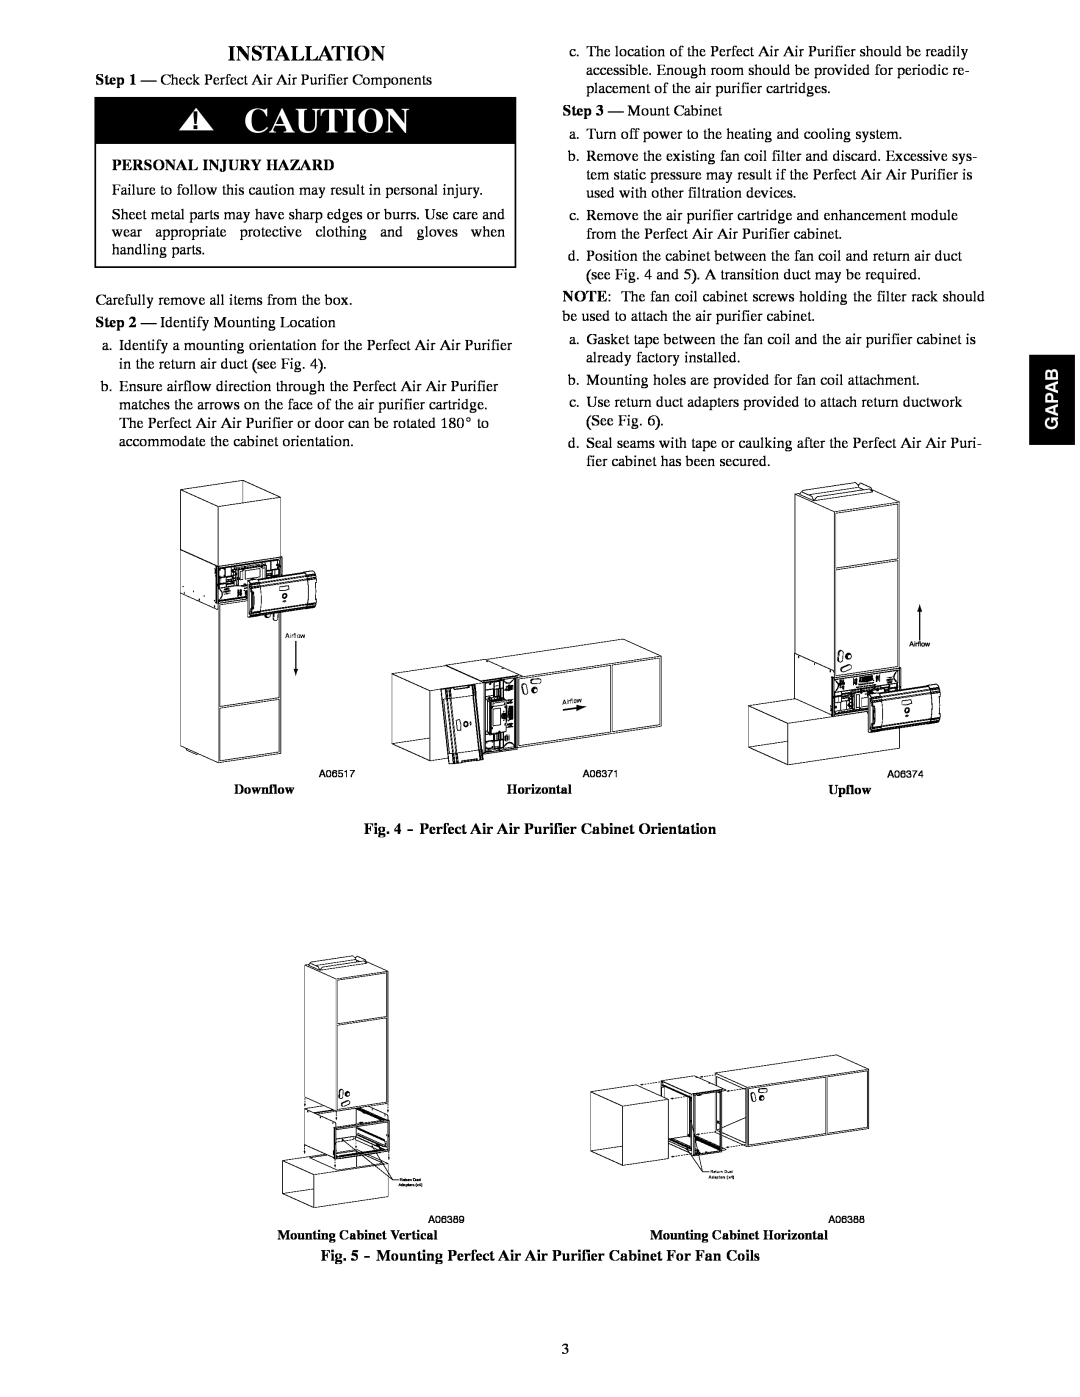 Bryant 1620 installation instructions Installation, Gapab, Personal Injury Hazard 